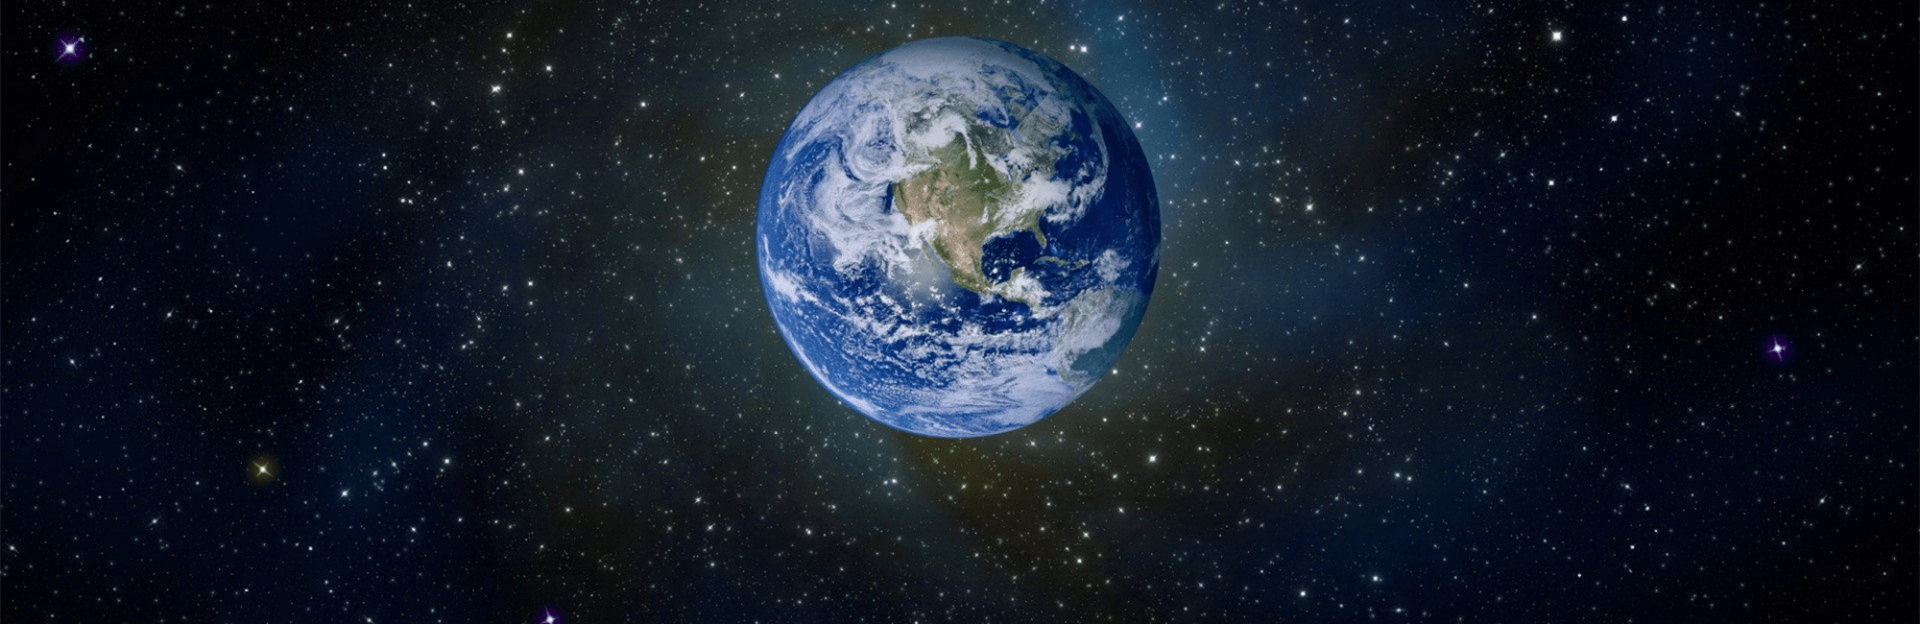 earth and universe homepage hero image